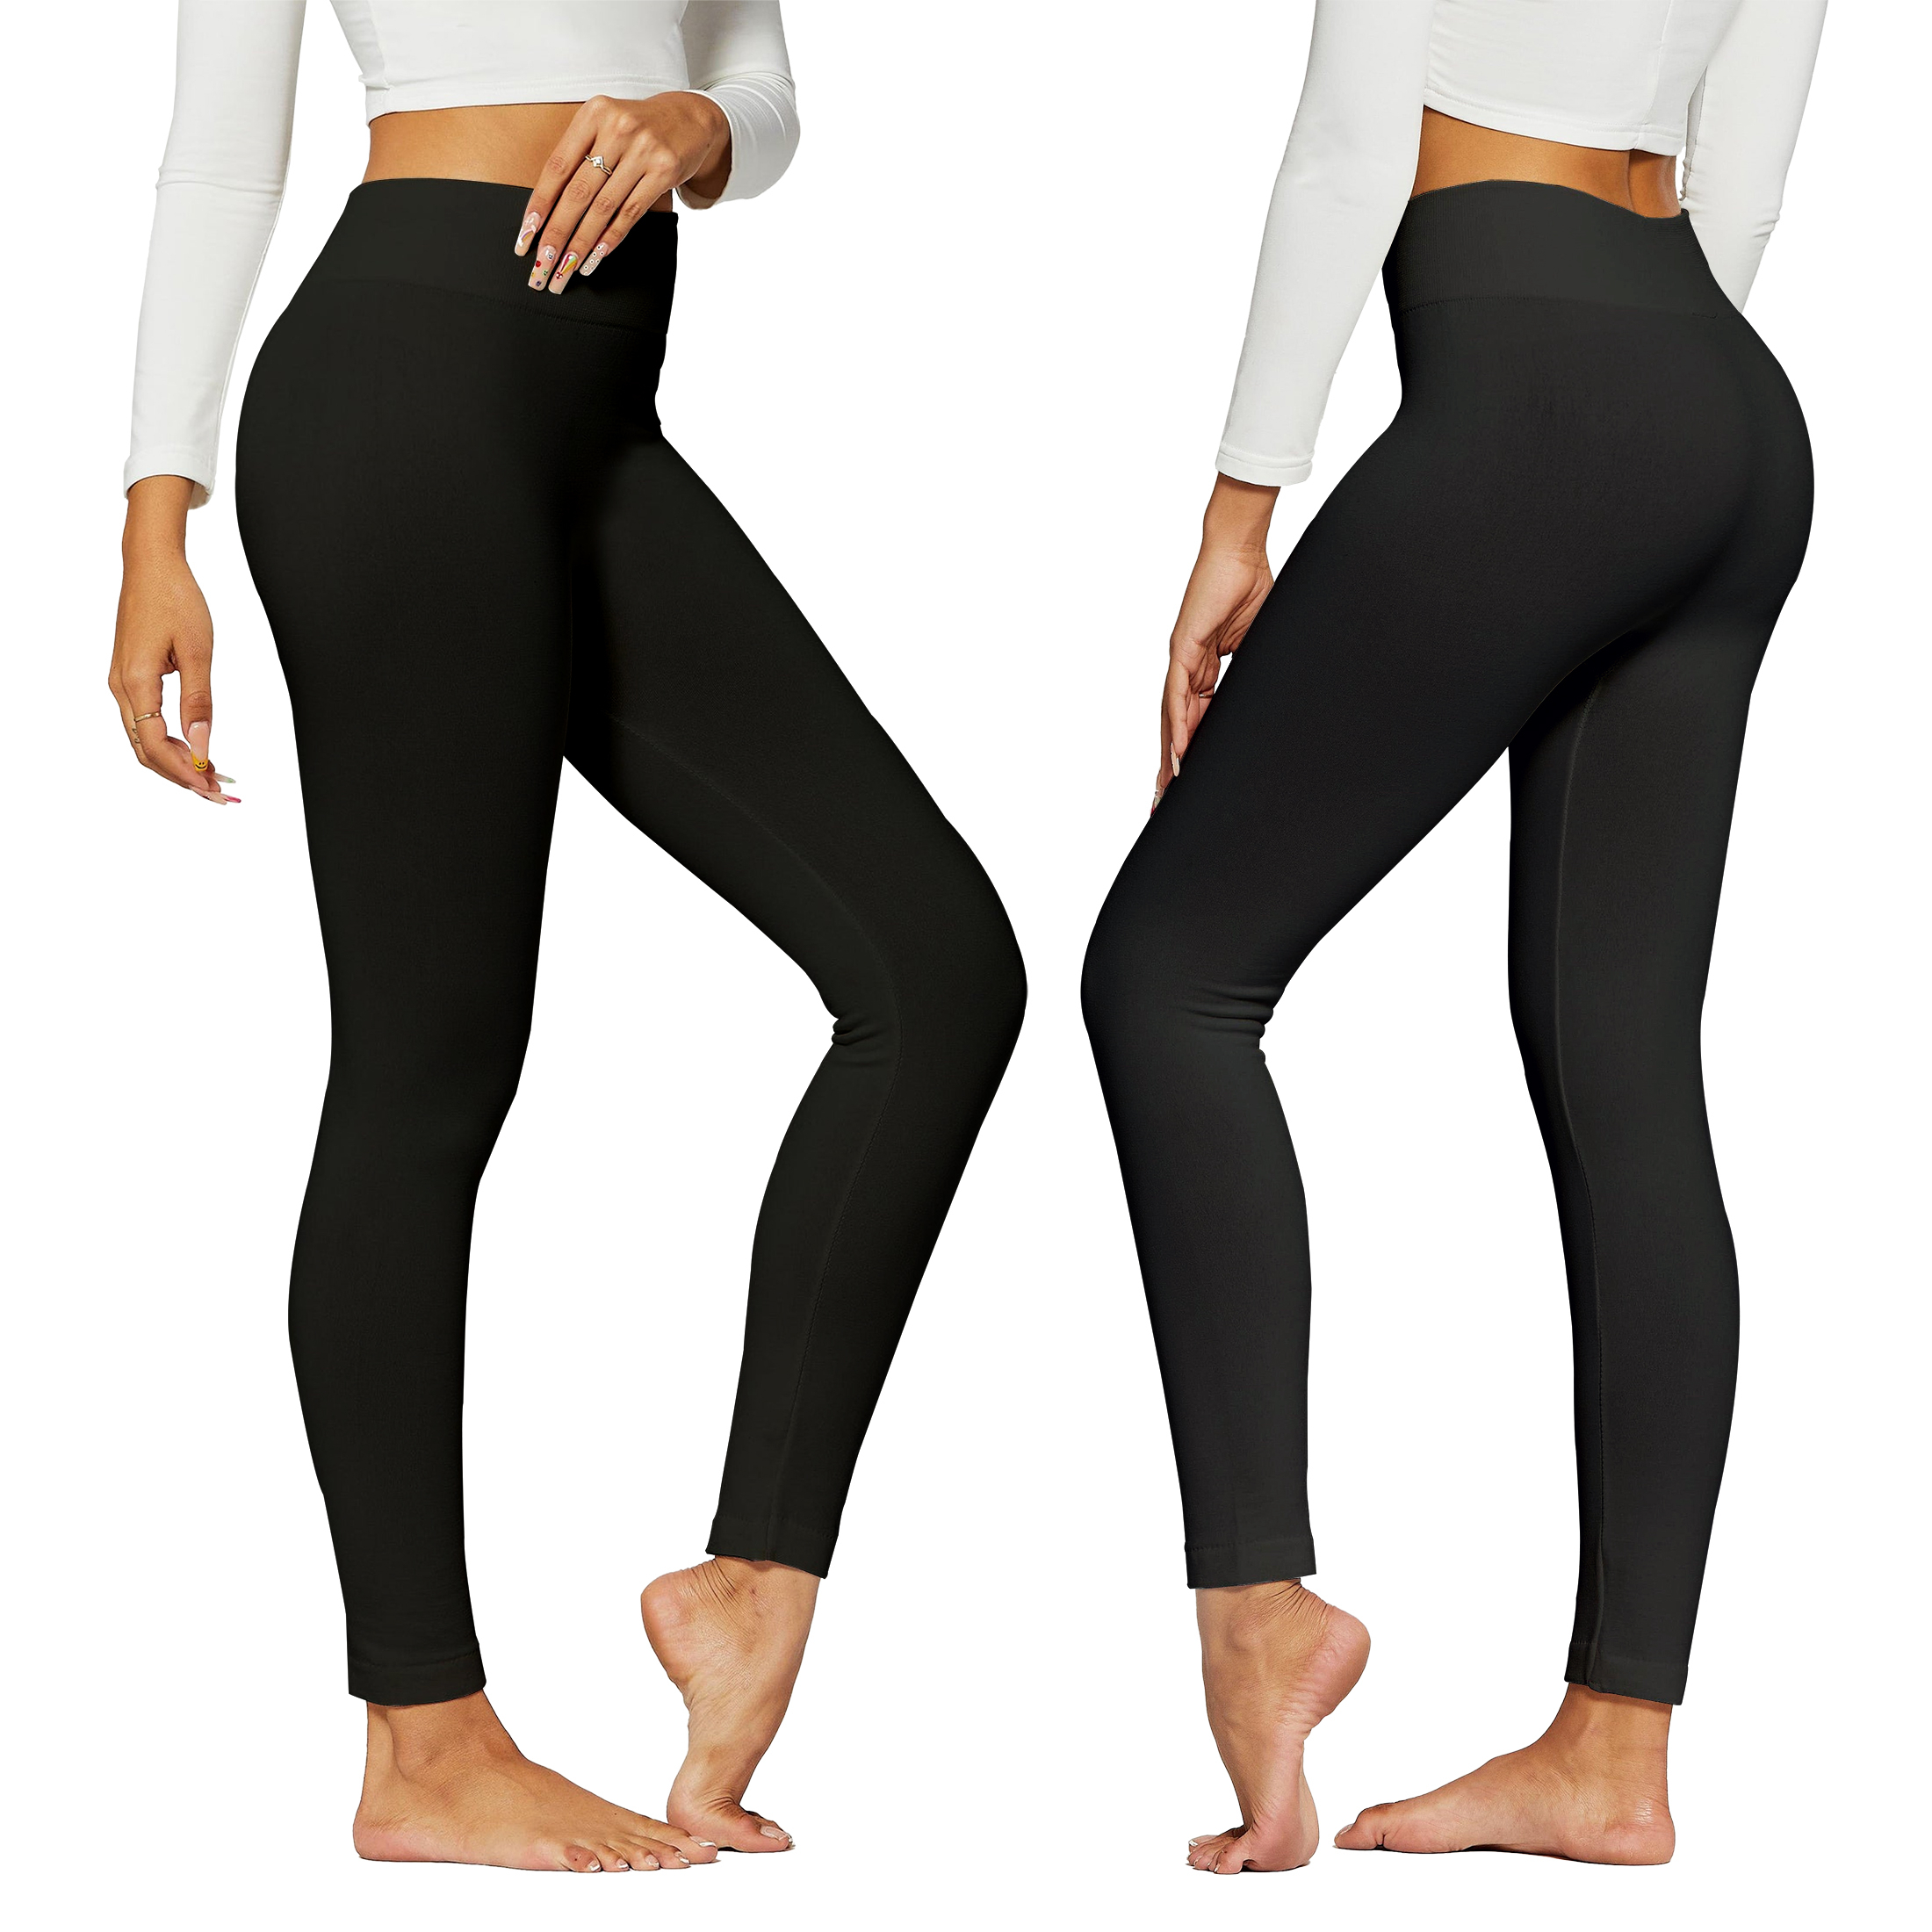 Women's Premium Quality High-Waist Fleece Lined Leggings (Plus Size Available) - Black, 1X/2X